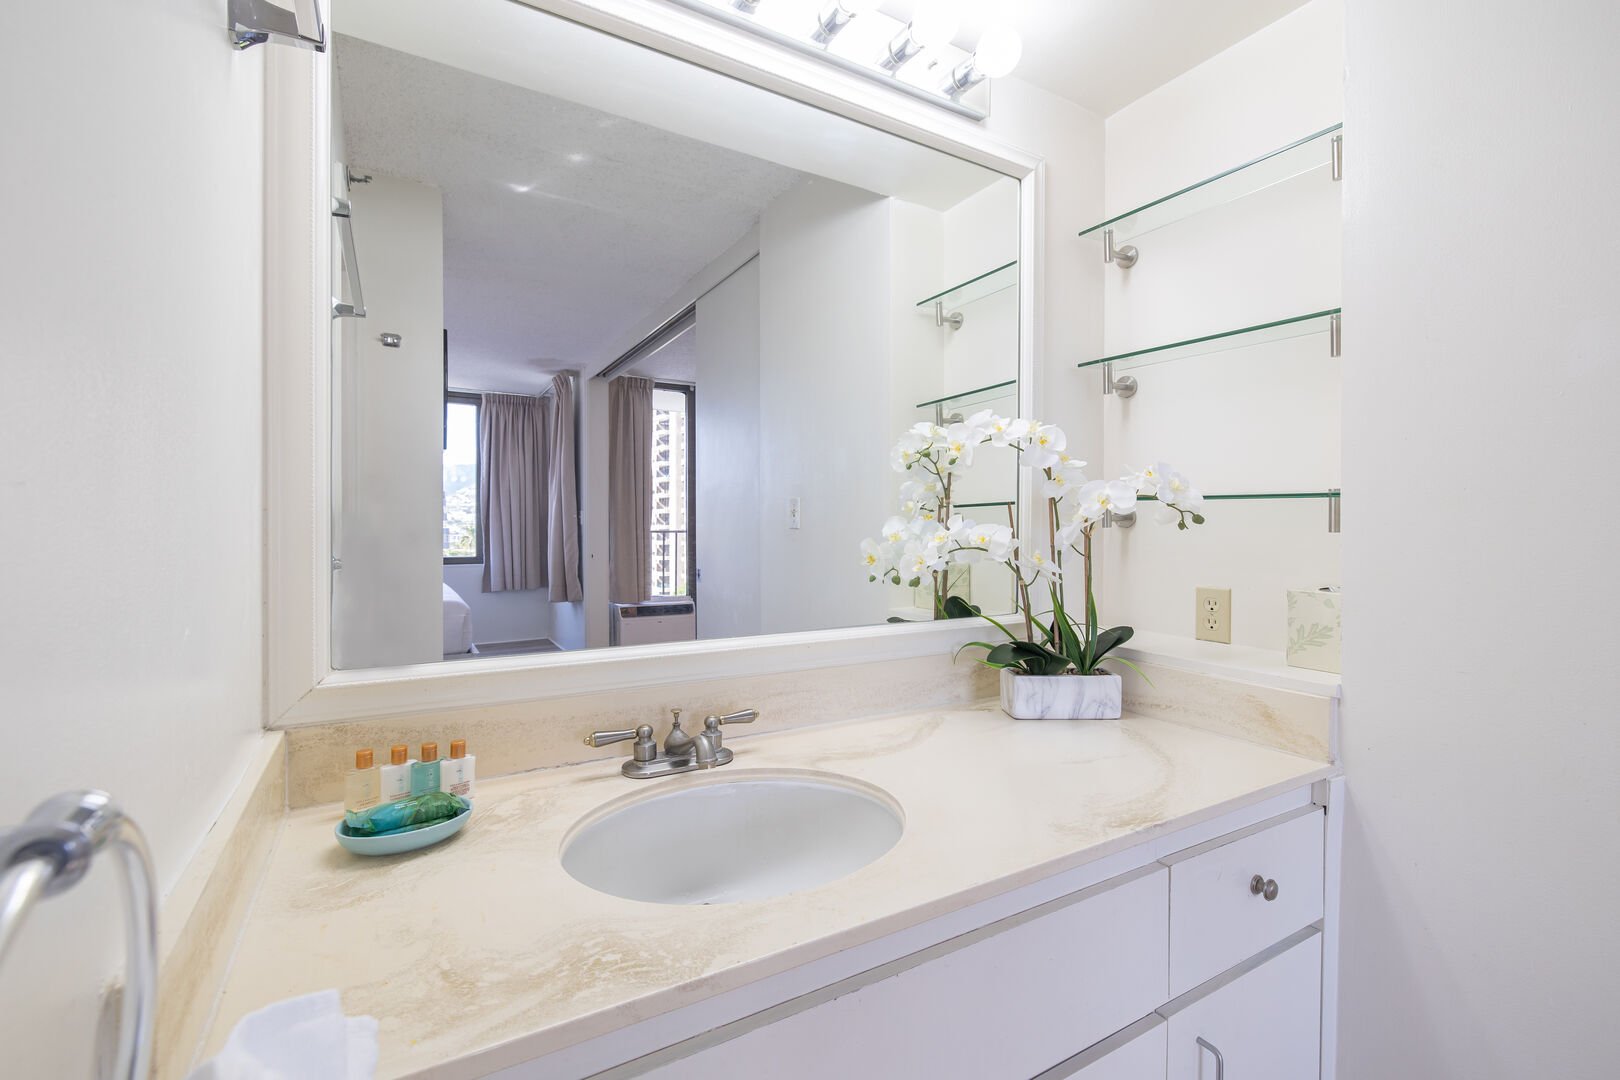 Full bathroom - vanity with cabinet